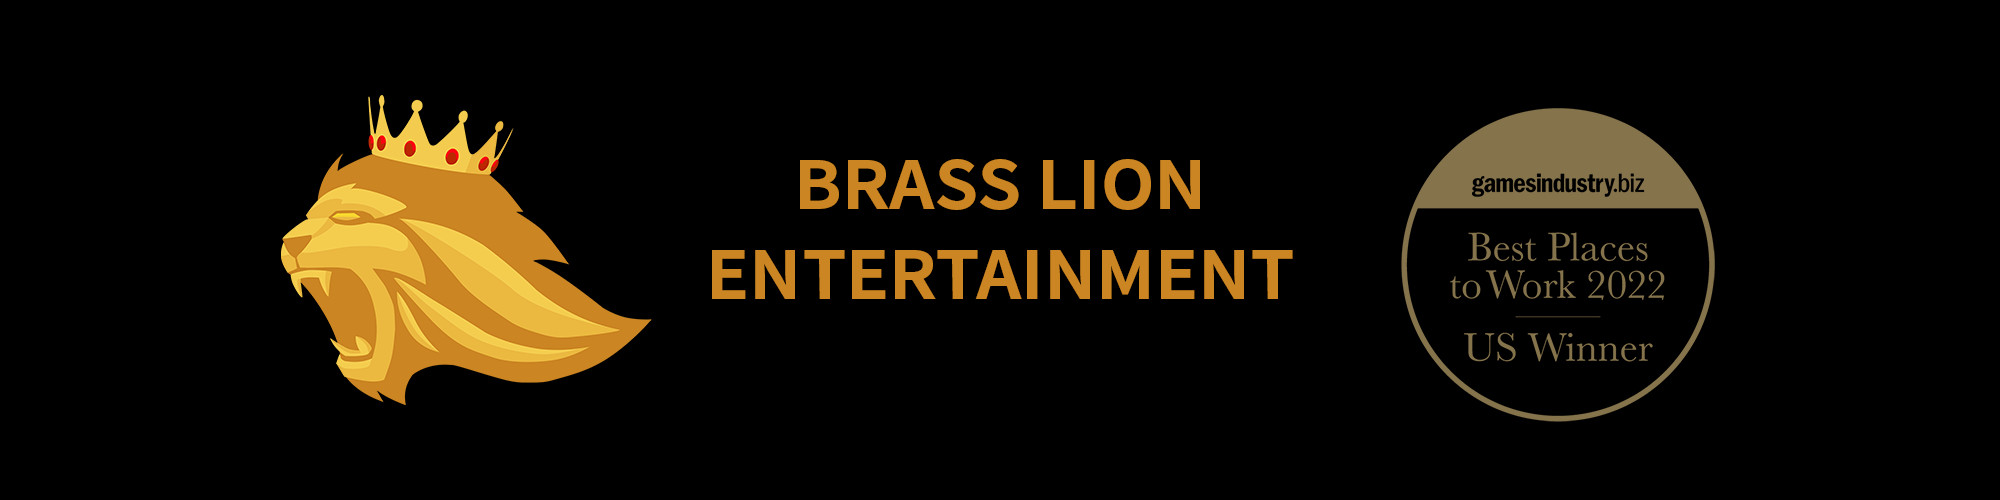 Brass Lion Entertainment